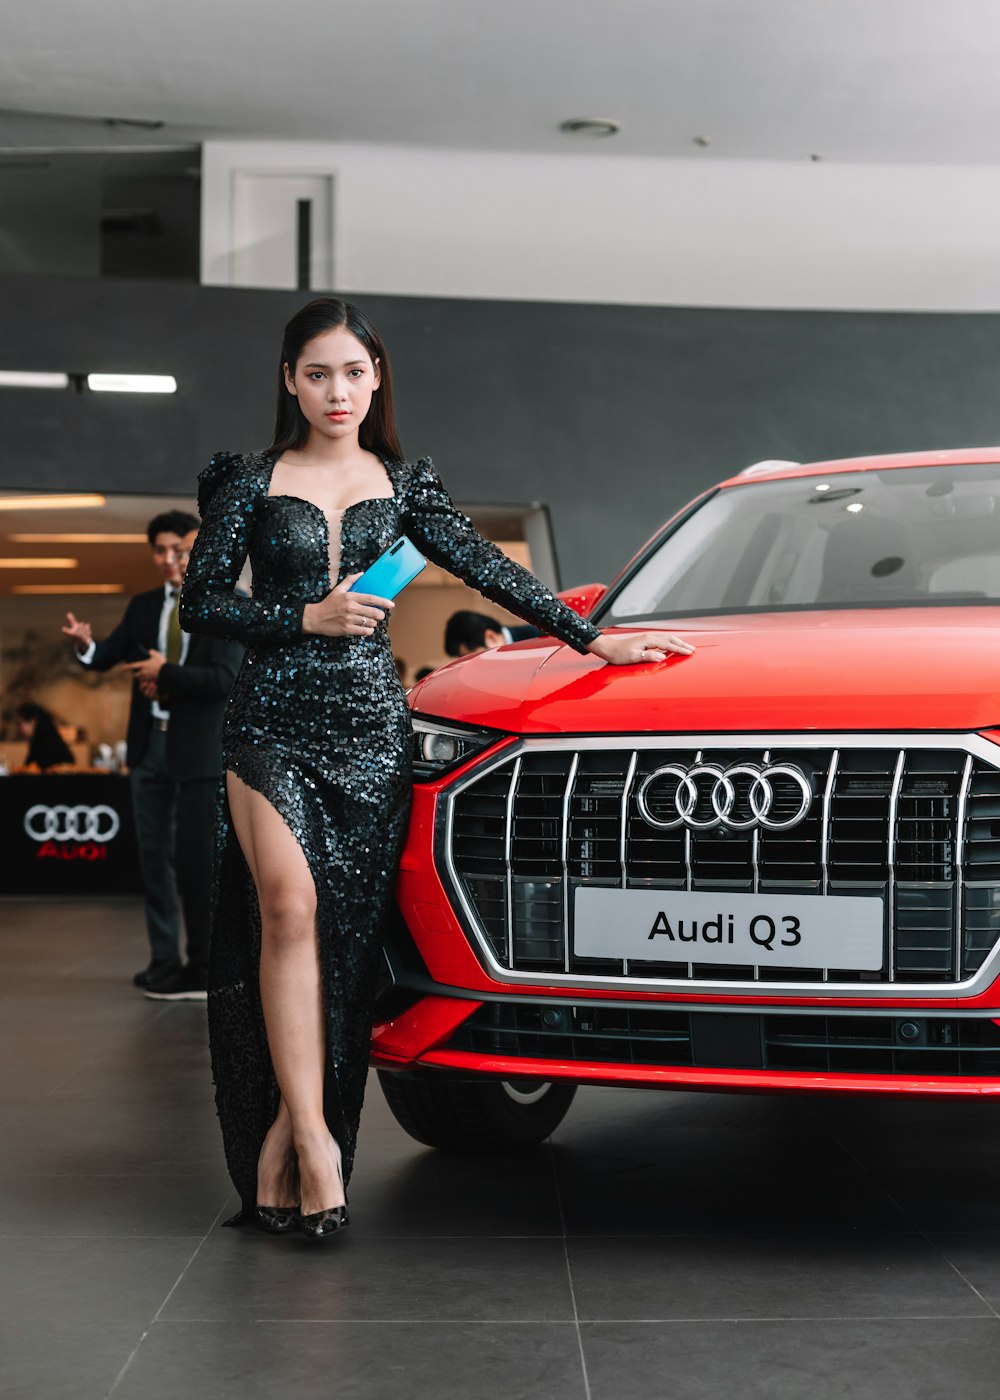 Frau in schwarzem Kleid steht neben rotem Audi Car